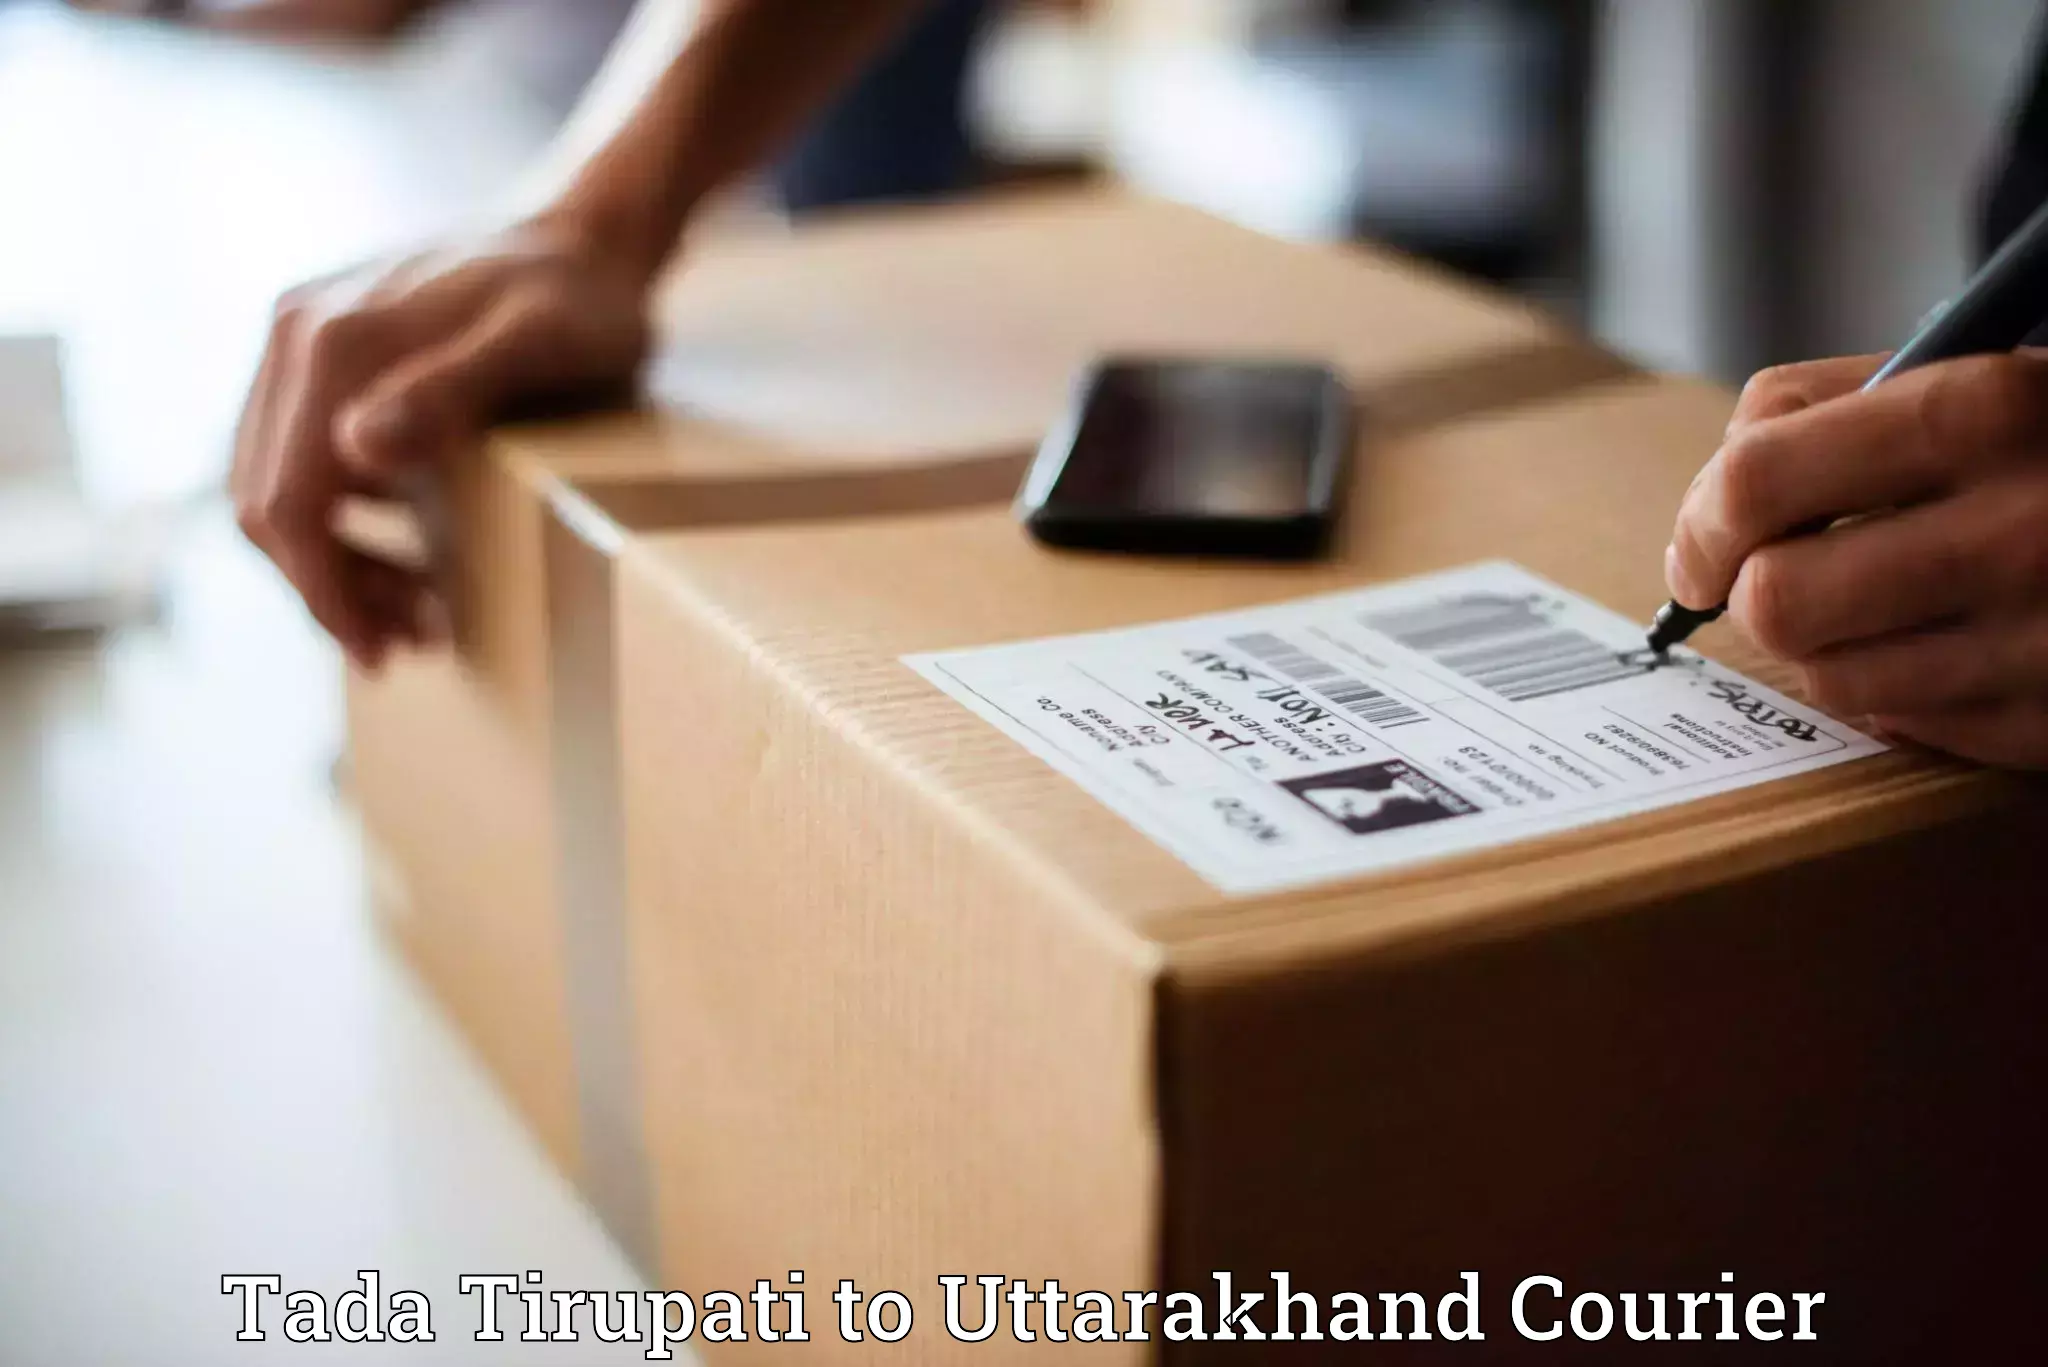 State-of-the-art courier technology Tada Tirupati to Rishikesh